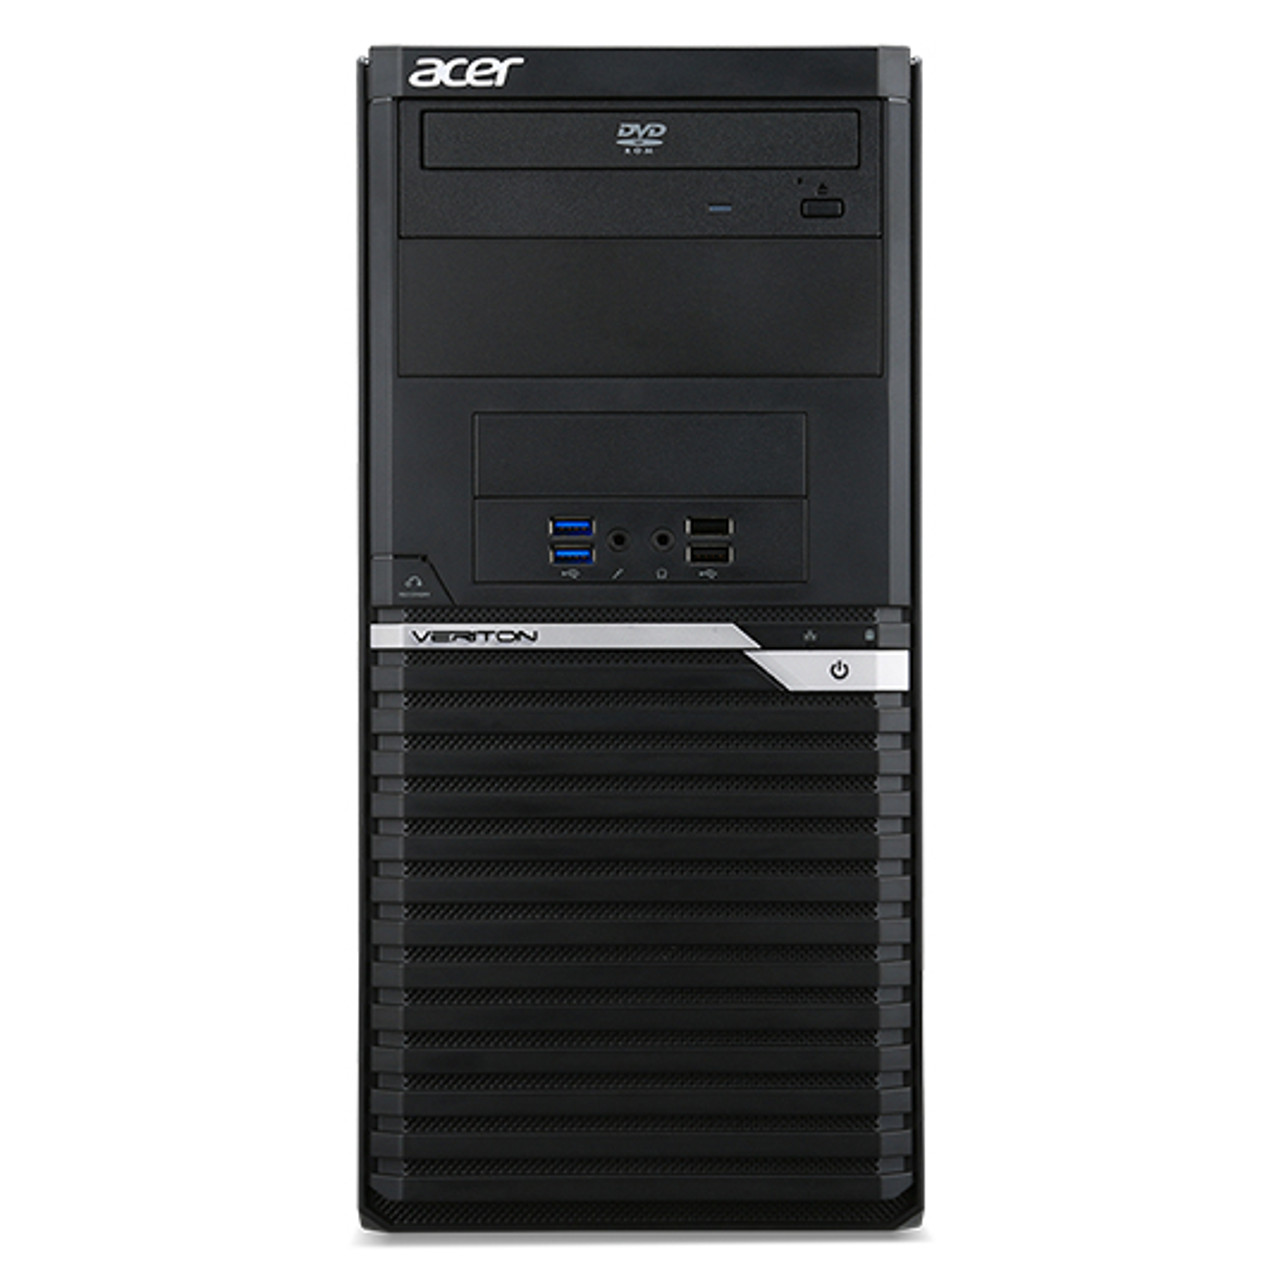 Acer Veriton VM4650G-I7770 3.6GHz i7-7700 Black PC